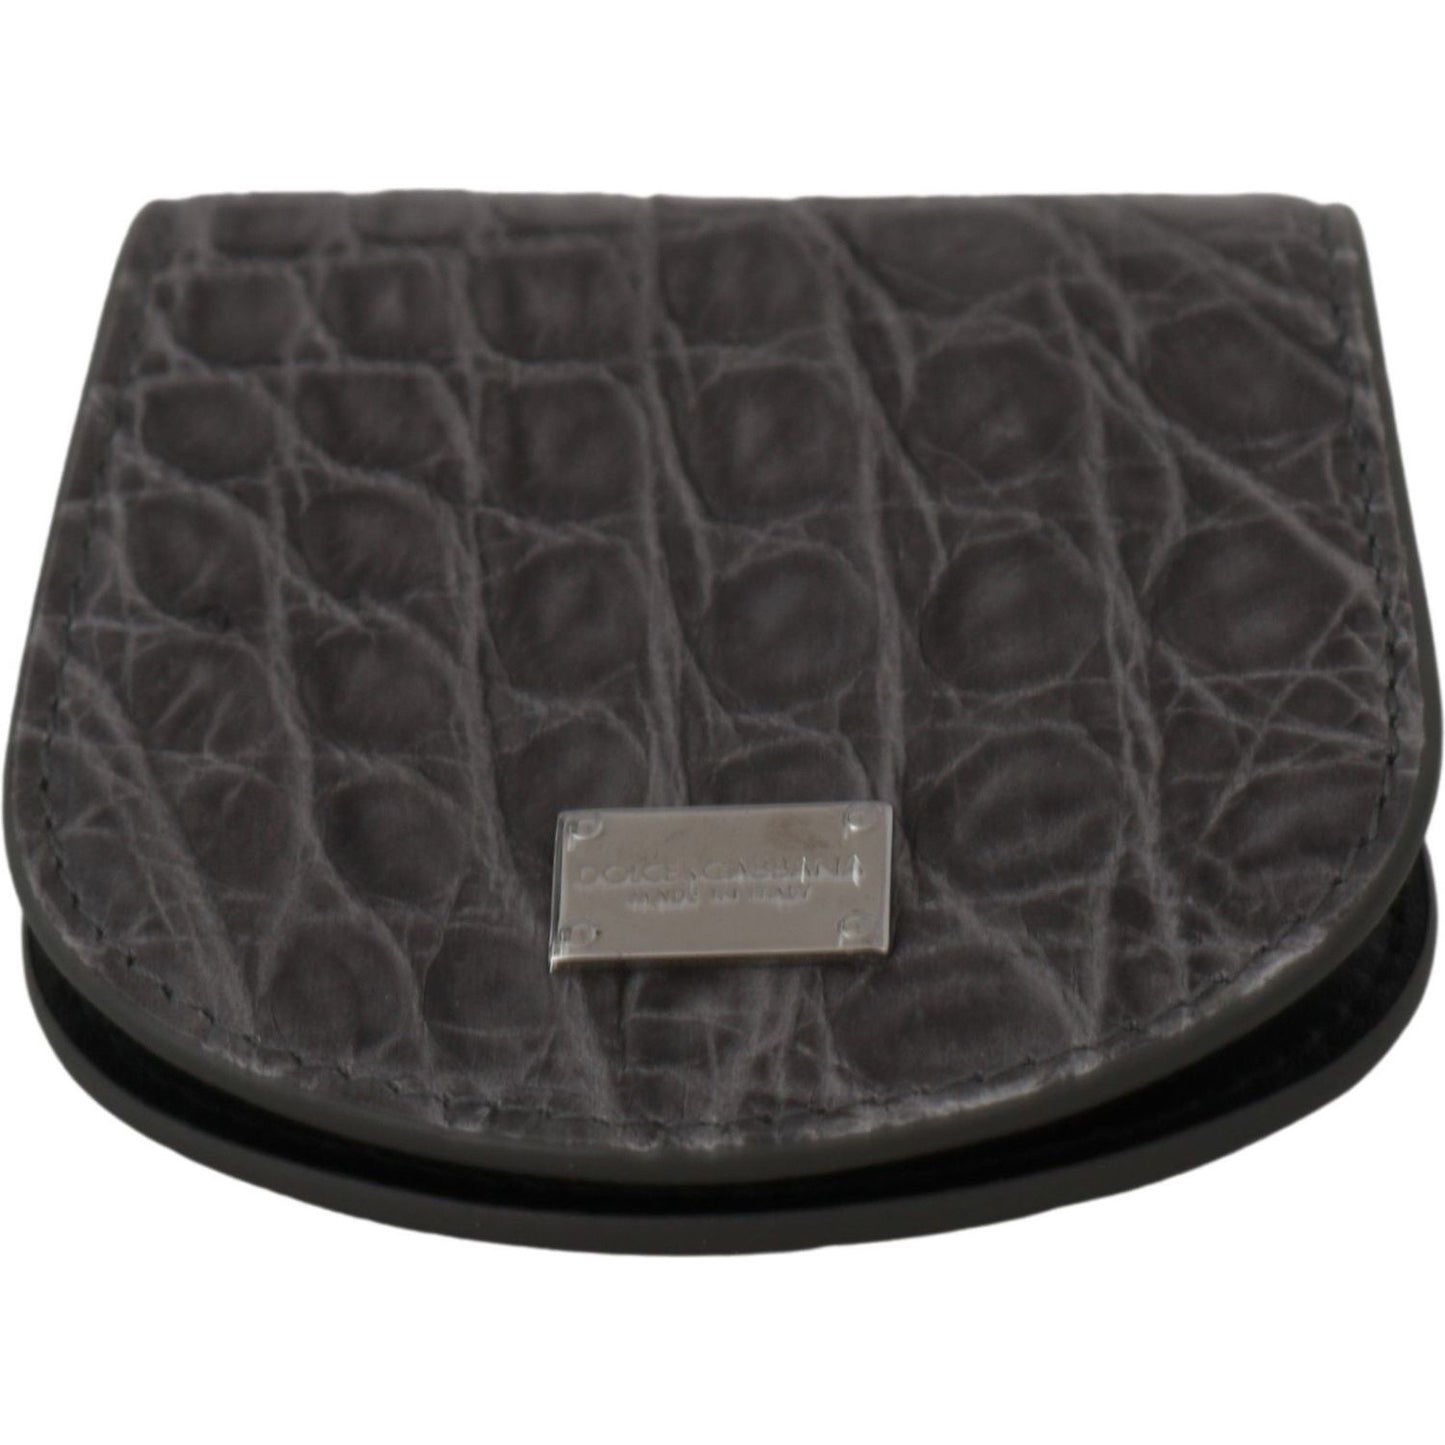 Dolce & Gabbana Exotic Gray Leather Condom Case Wallet Condom Case gray-exotic-skin-condom-case-holder-pocket-wallet IMG_0241-d418def8-45c.jpg